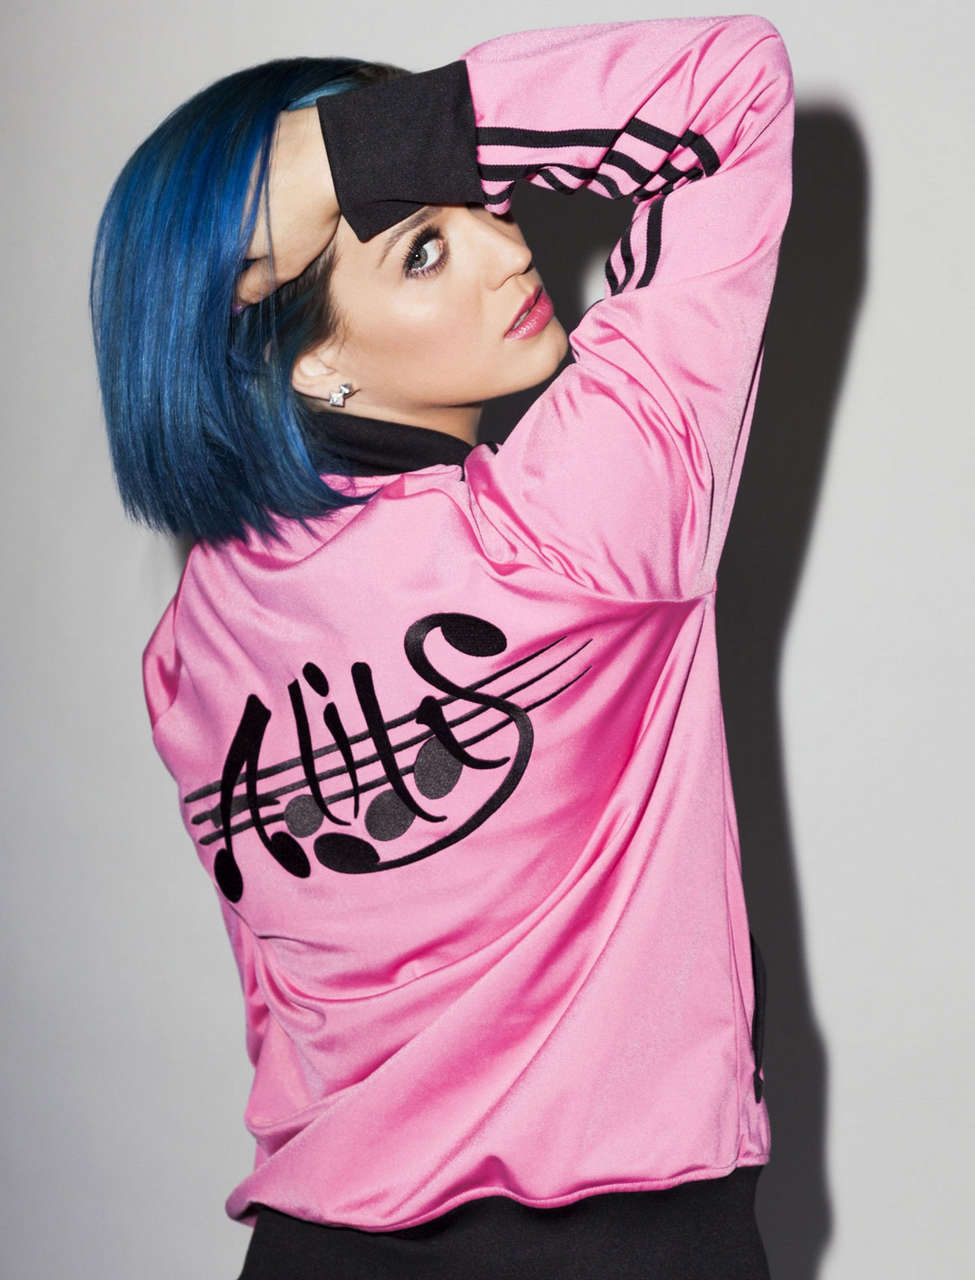 Katy Perry Adidas 2012 Promos